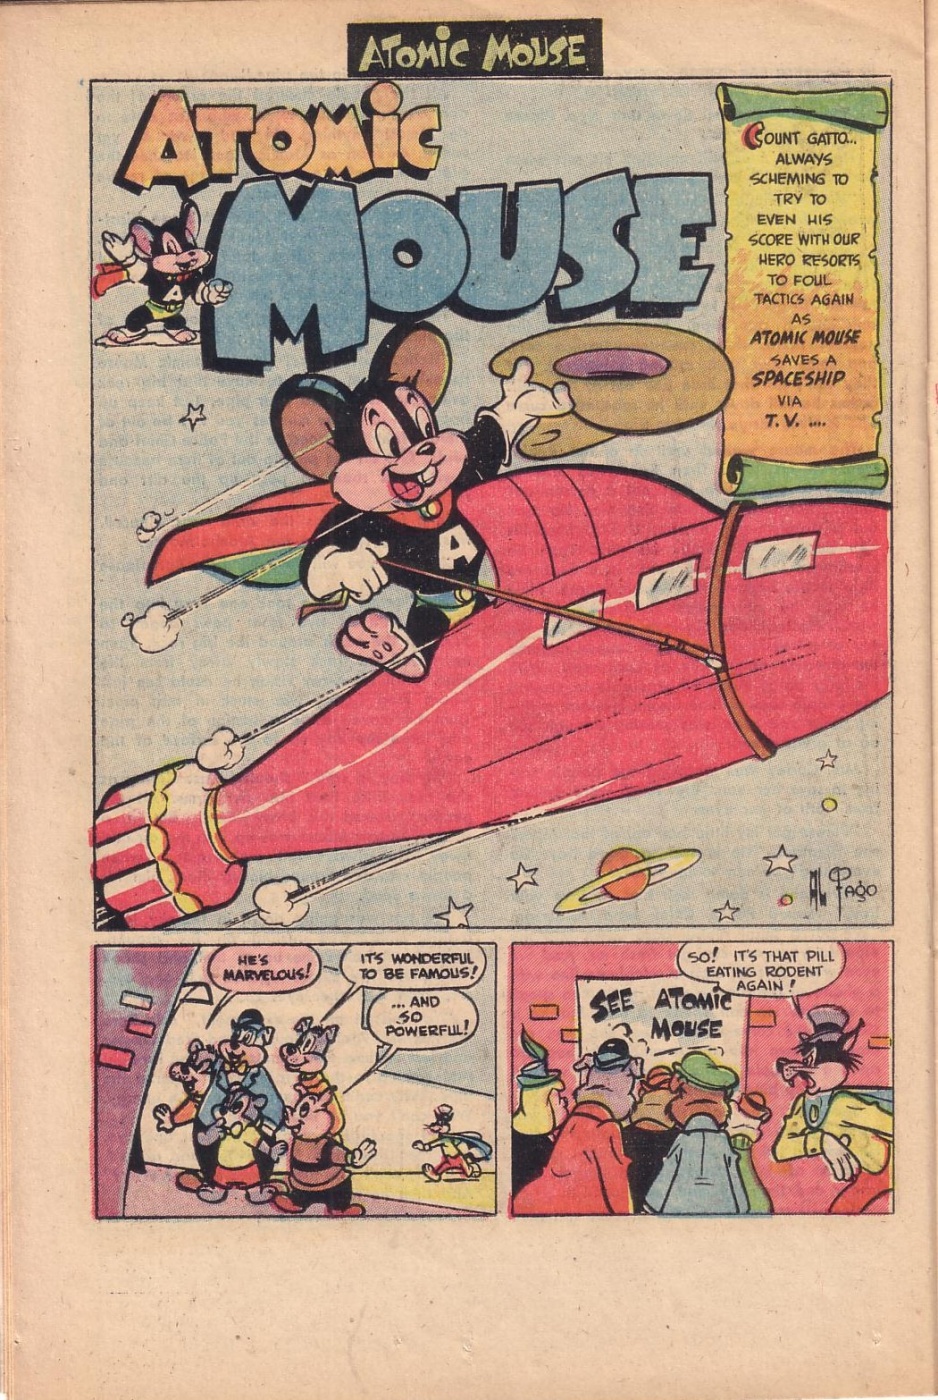 Atomic Mouse Comics - Funny Comics (20)